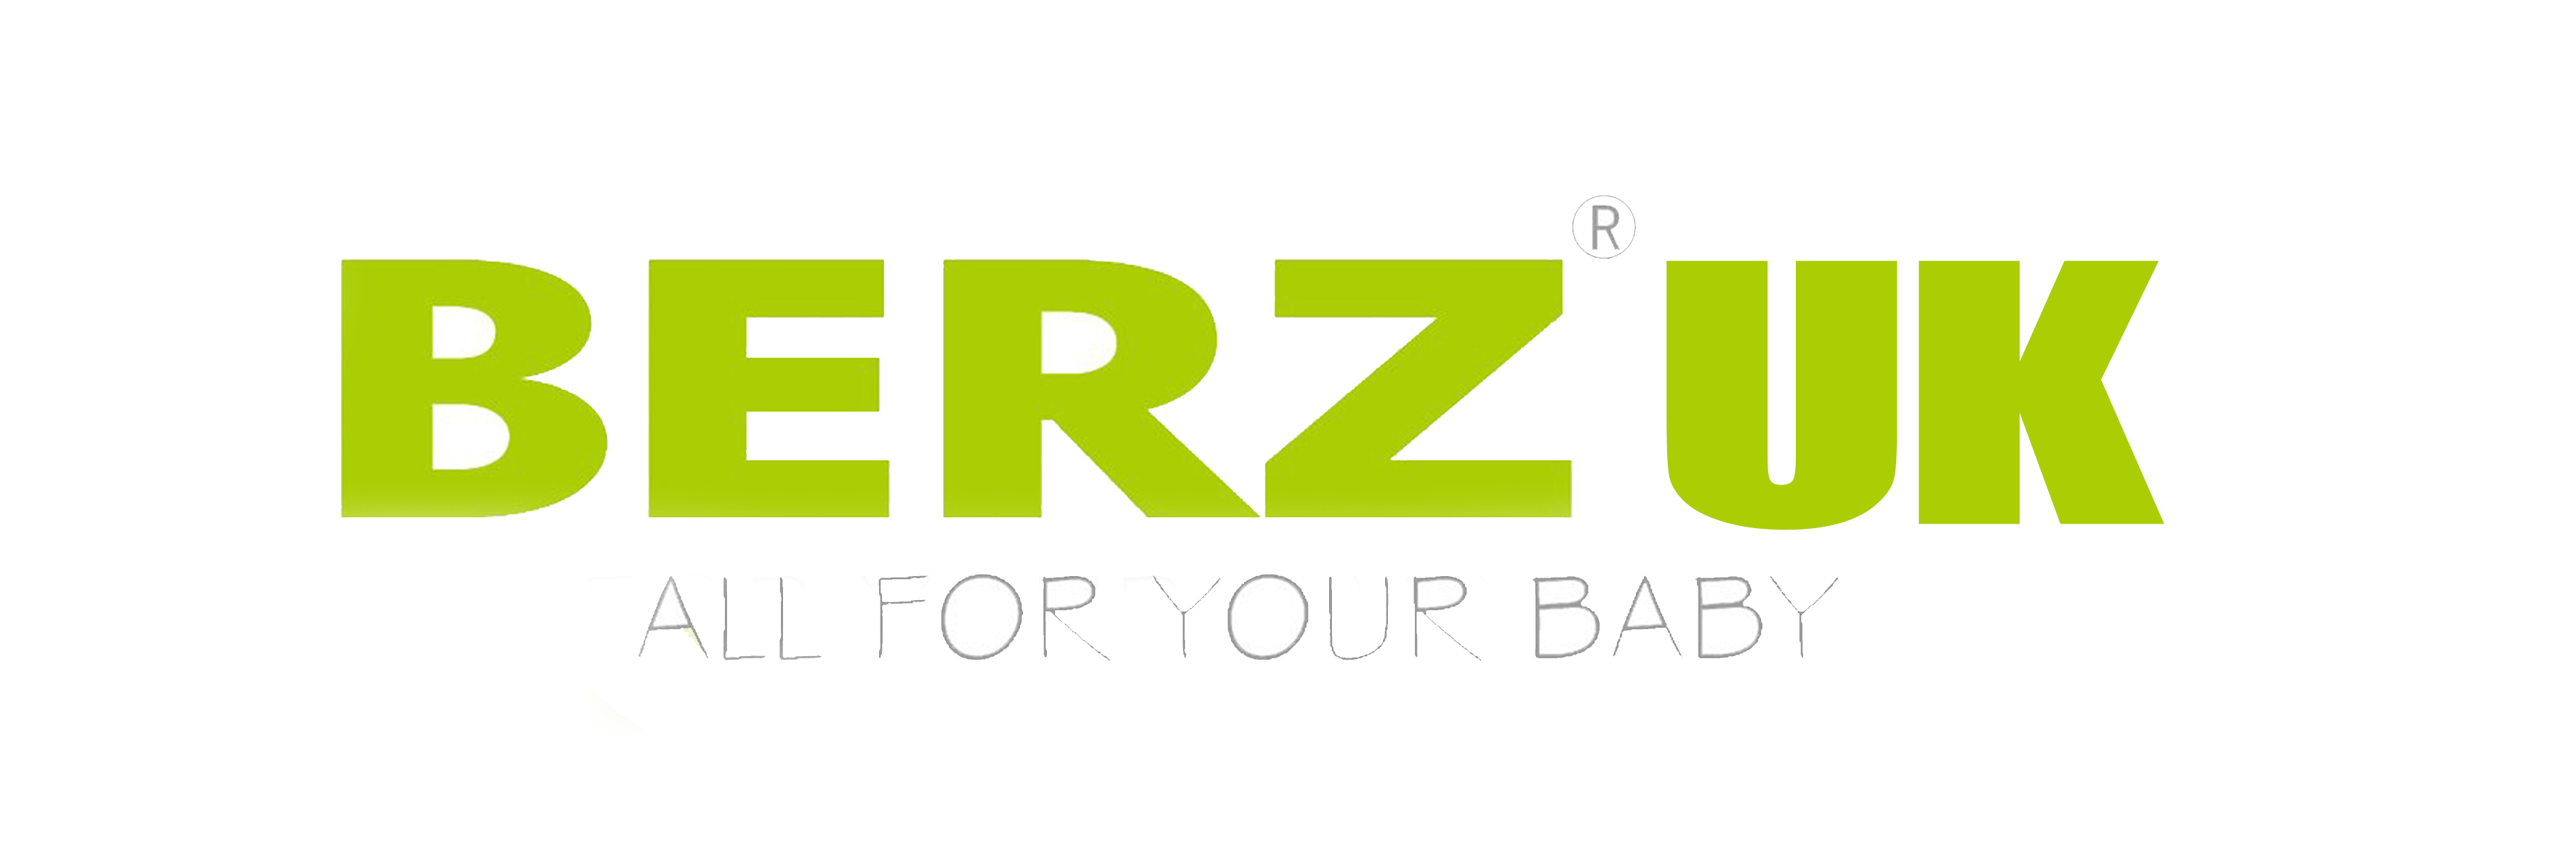 Berz UK logo